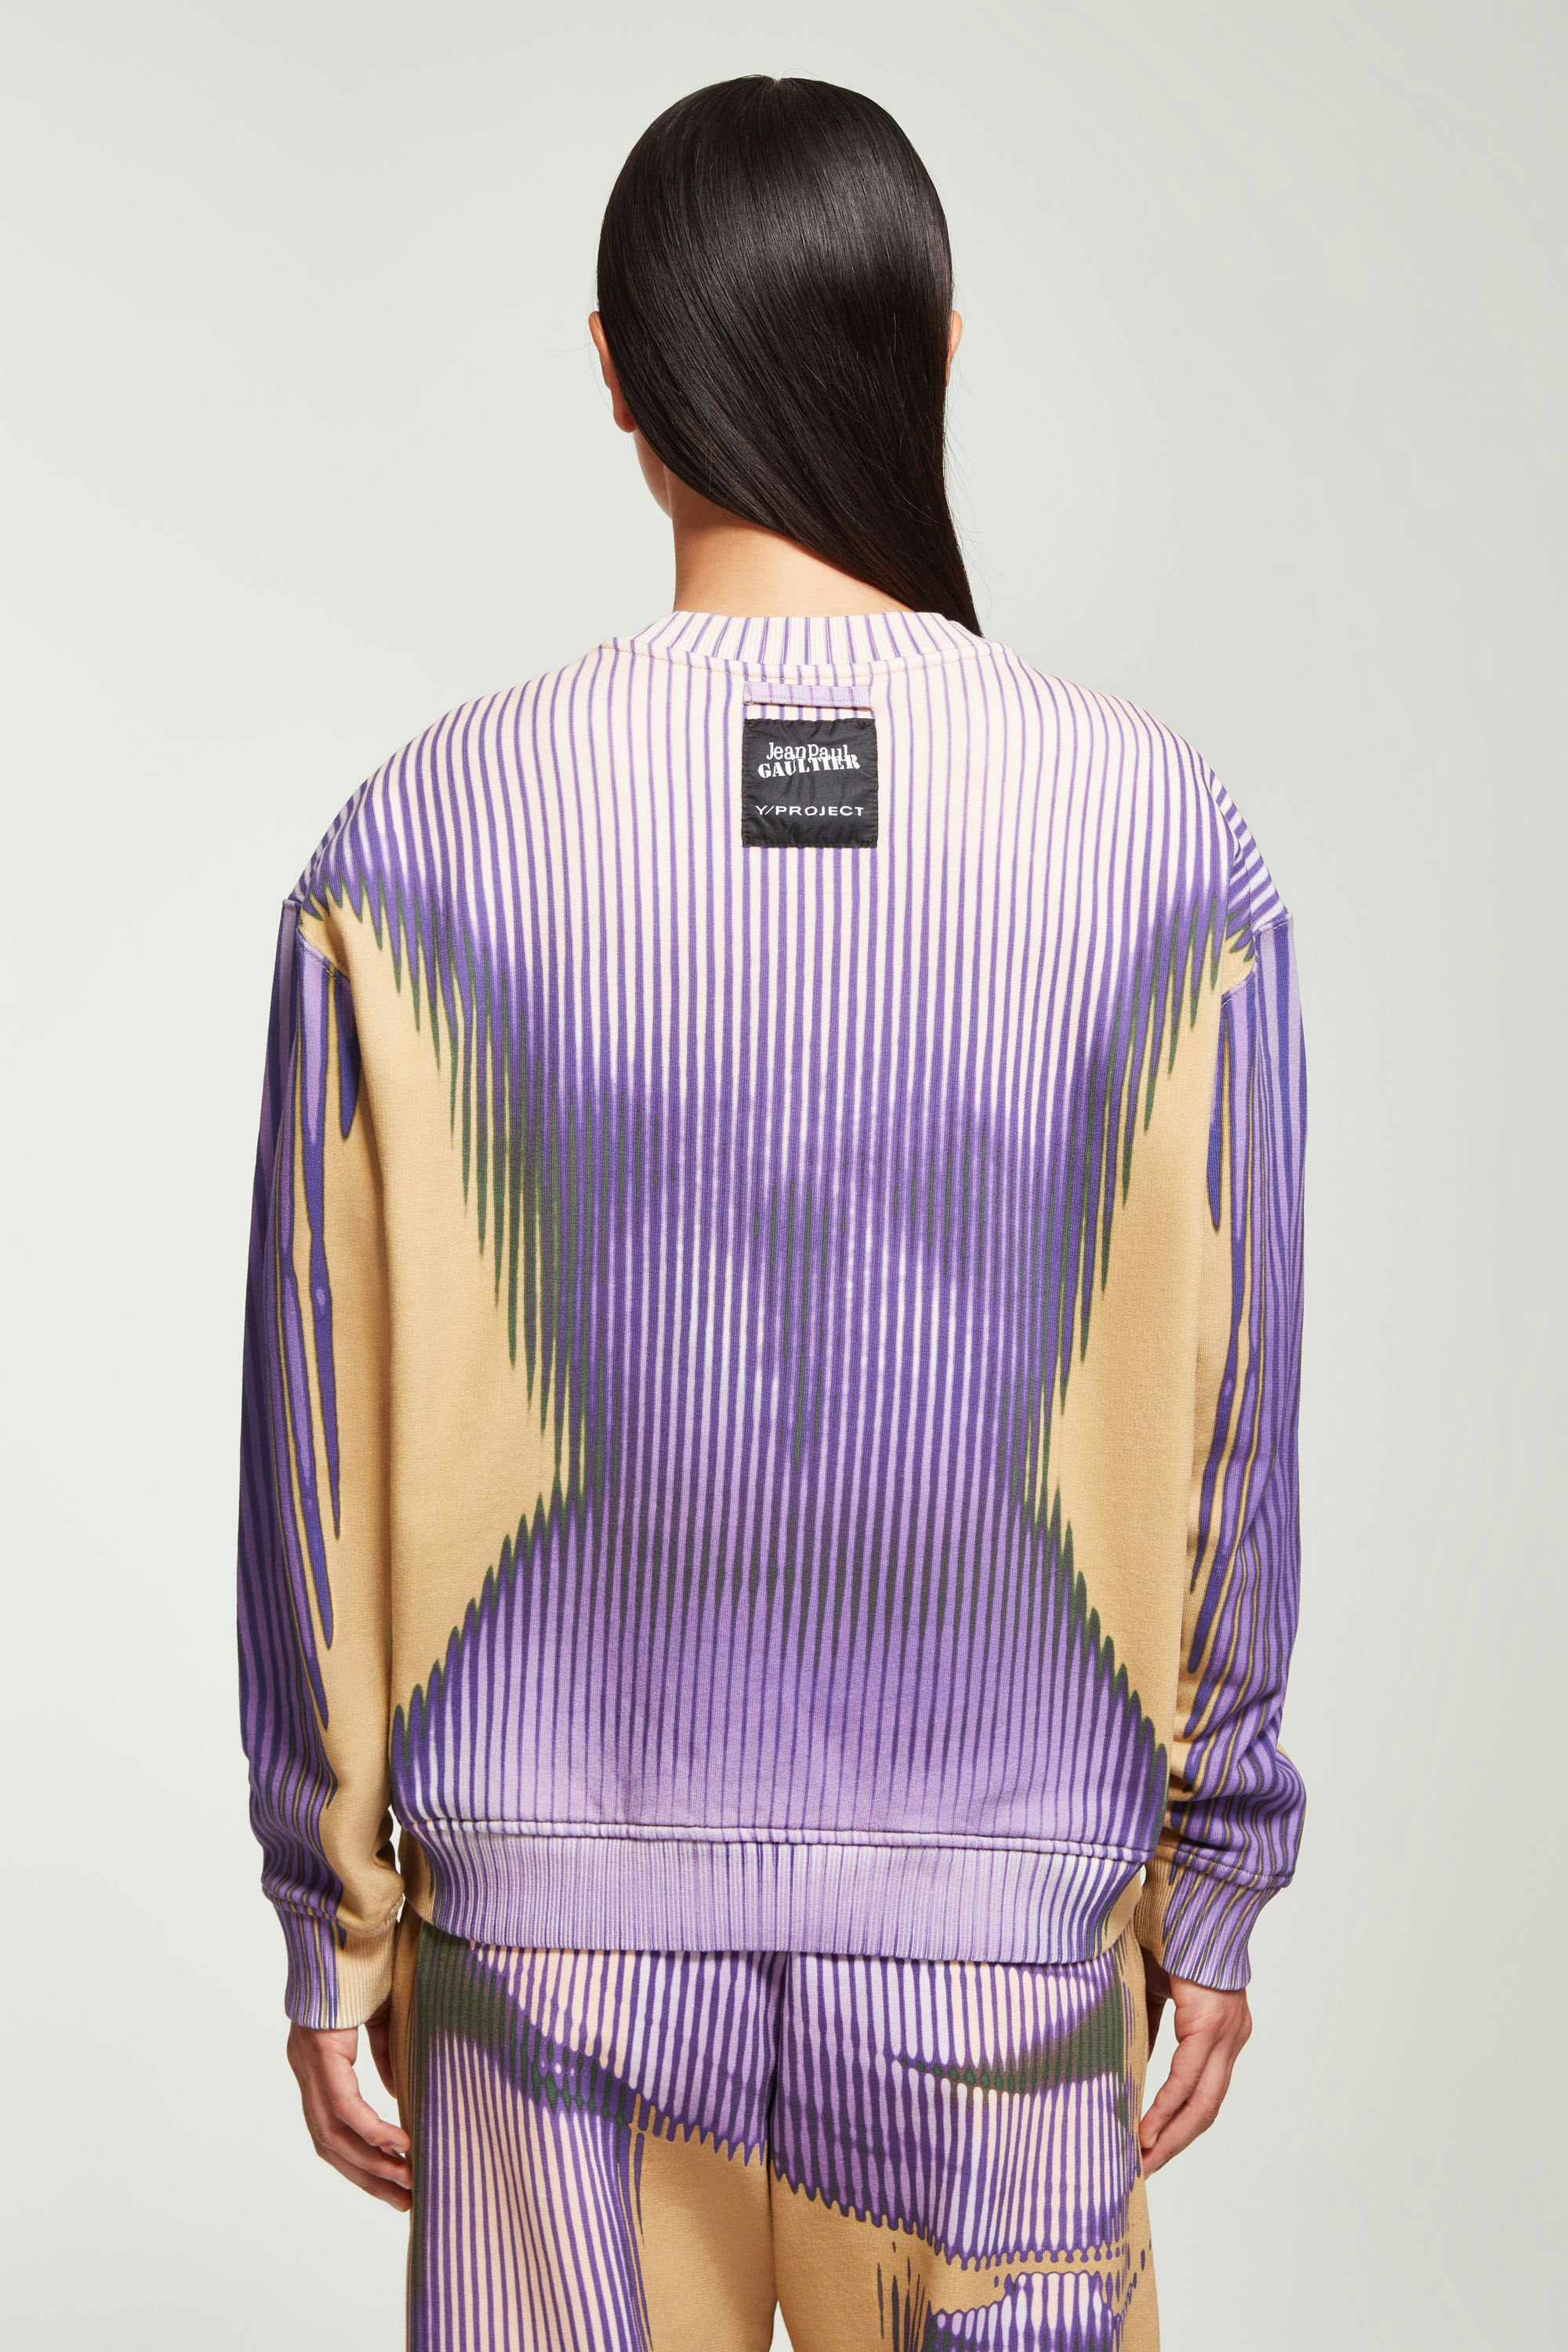 The Purple & Yellow Body Morph Fitted Sweatshirt by Jean Paul Gaultier x Y/Project